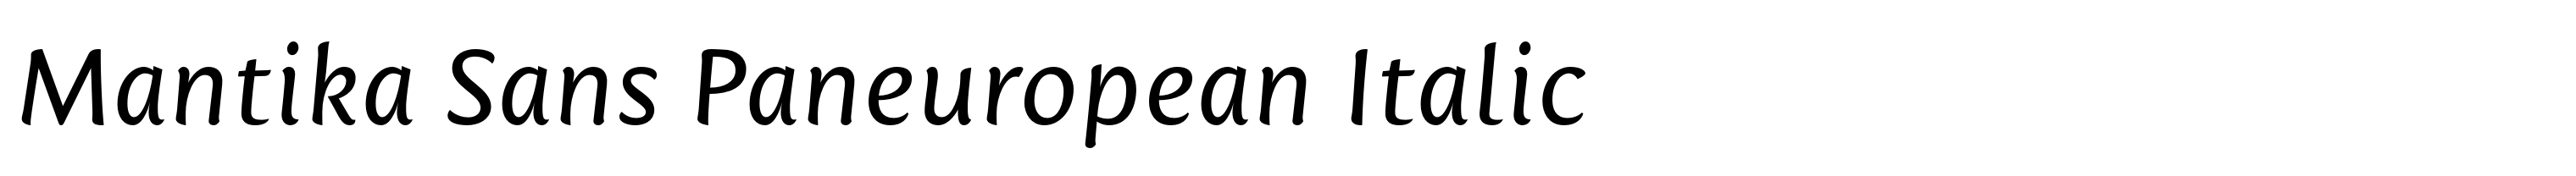 Mantika Sans Paneuropean Italic